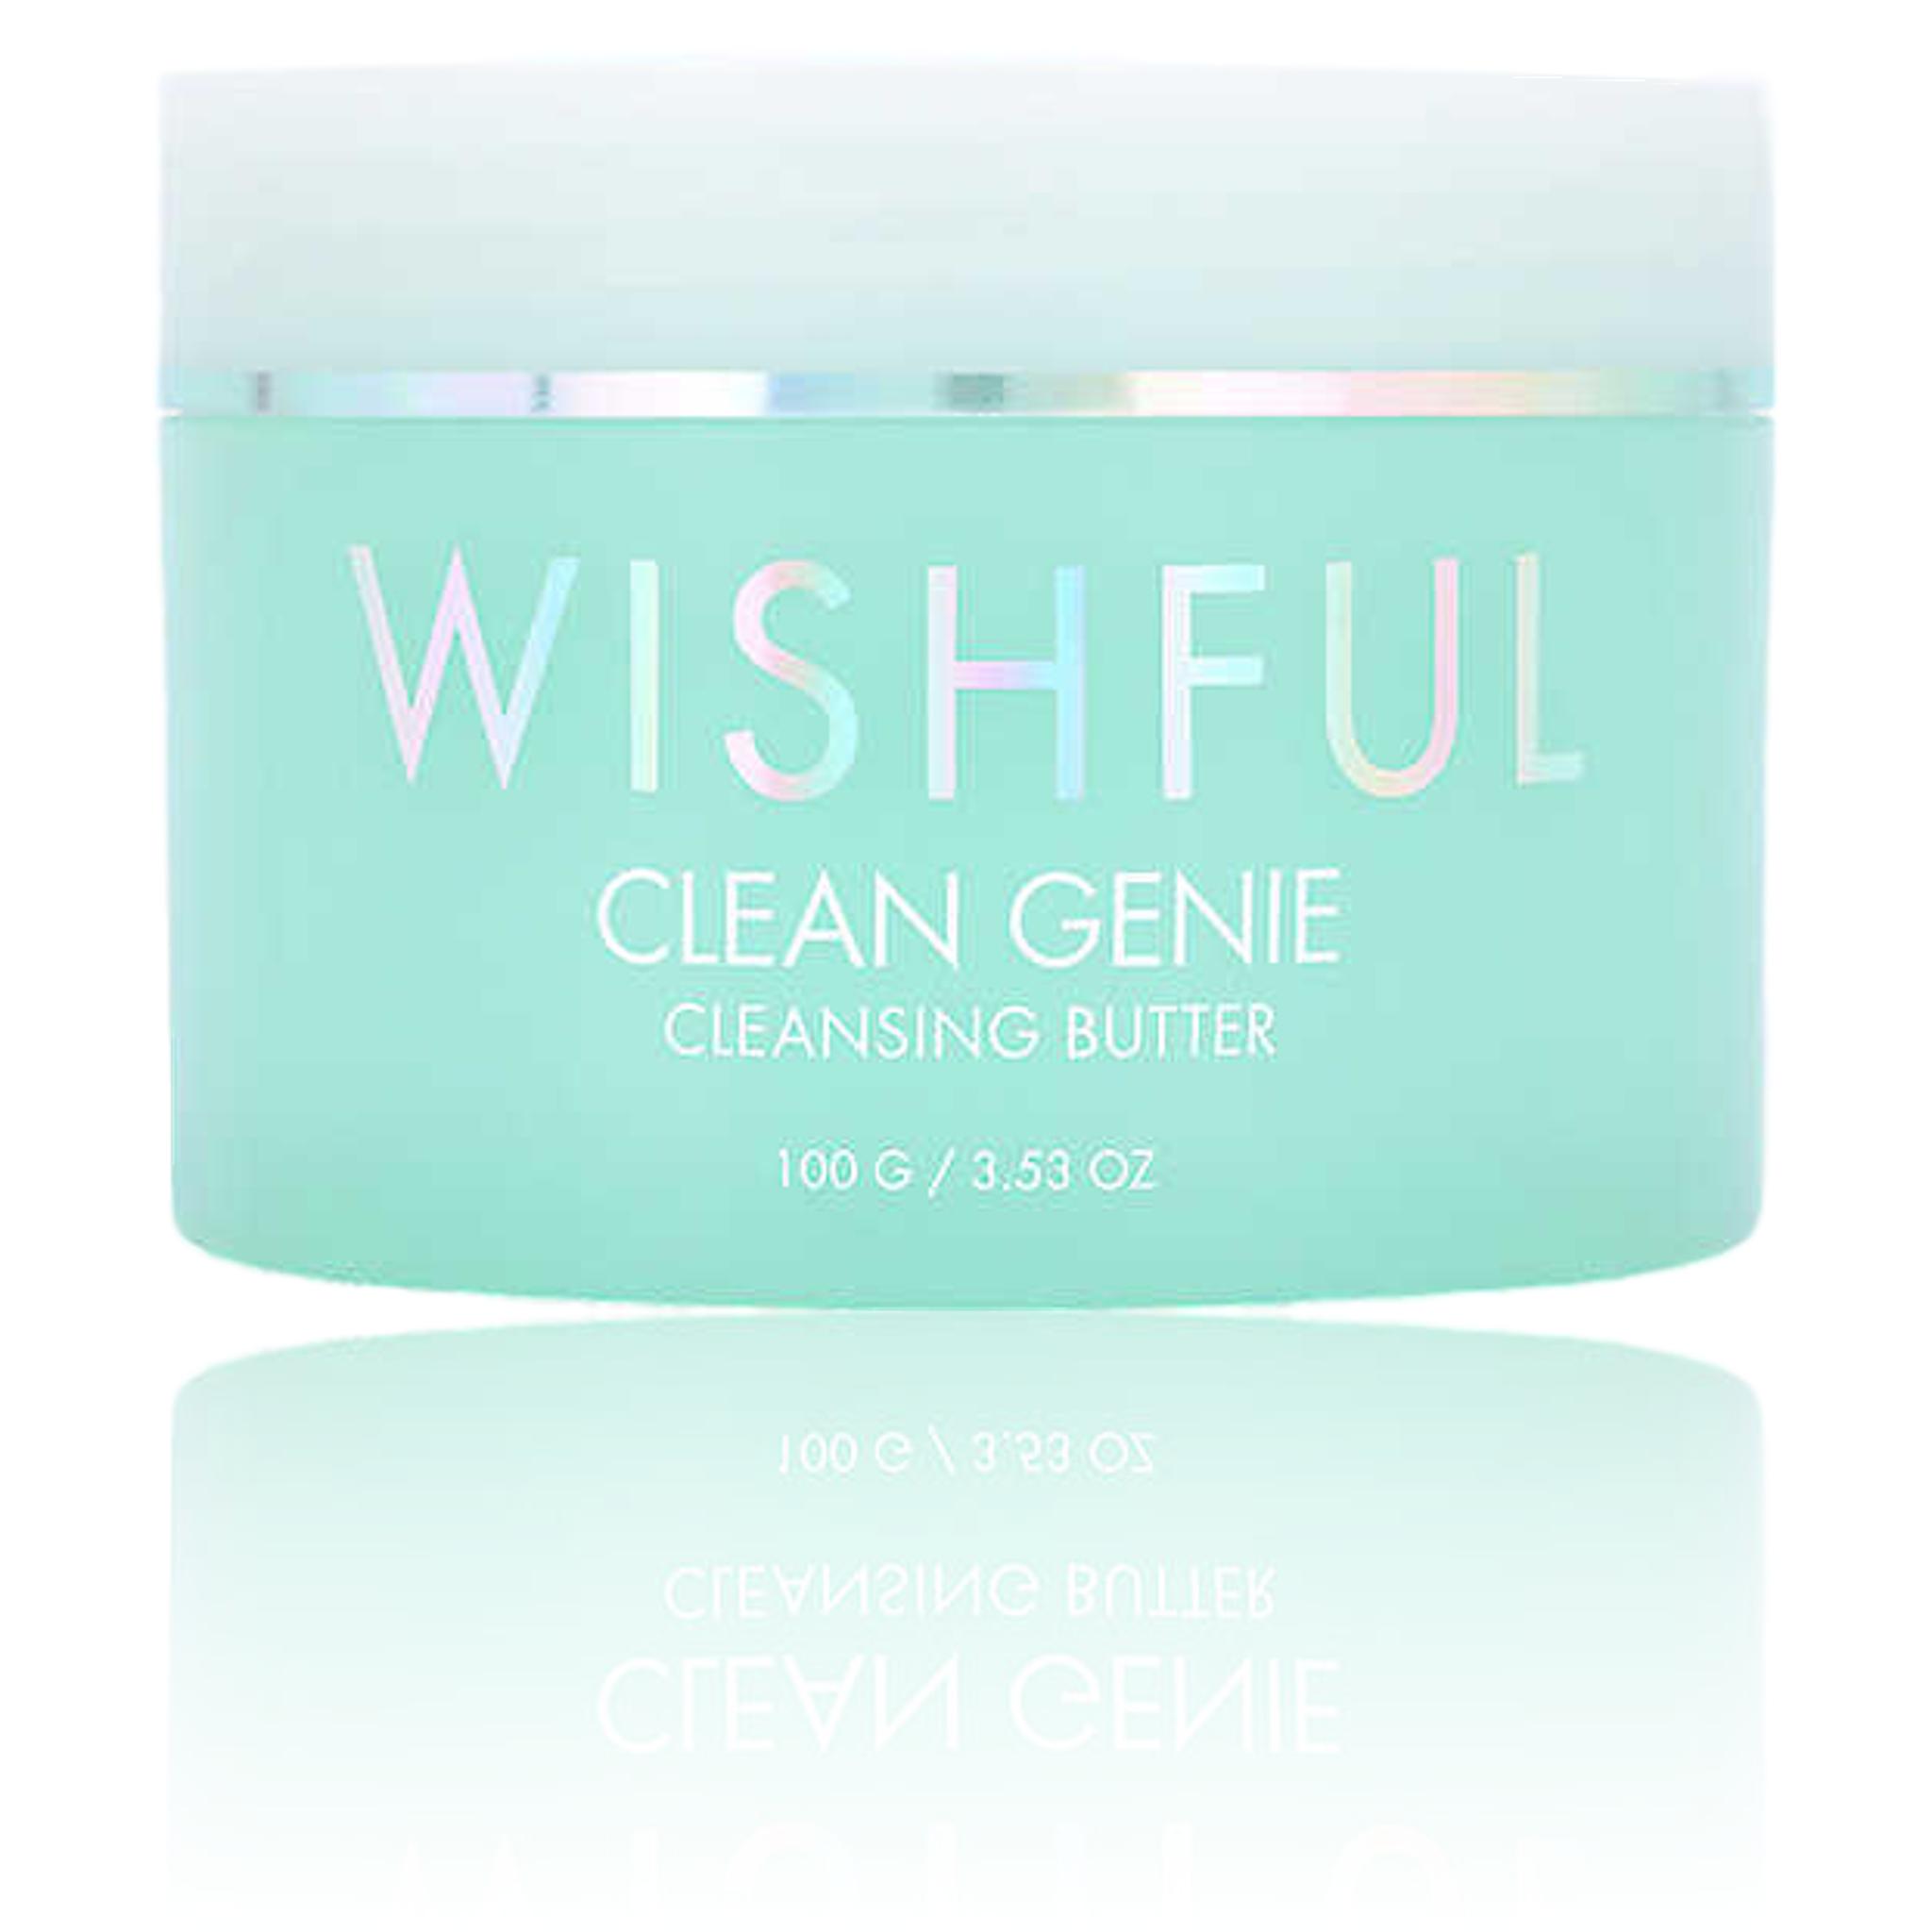 Wishful Clean Genie Cleansing Butter, 100g, cleanser, London Loves Beauty